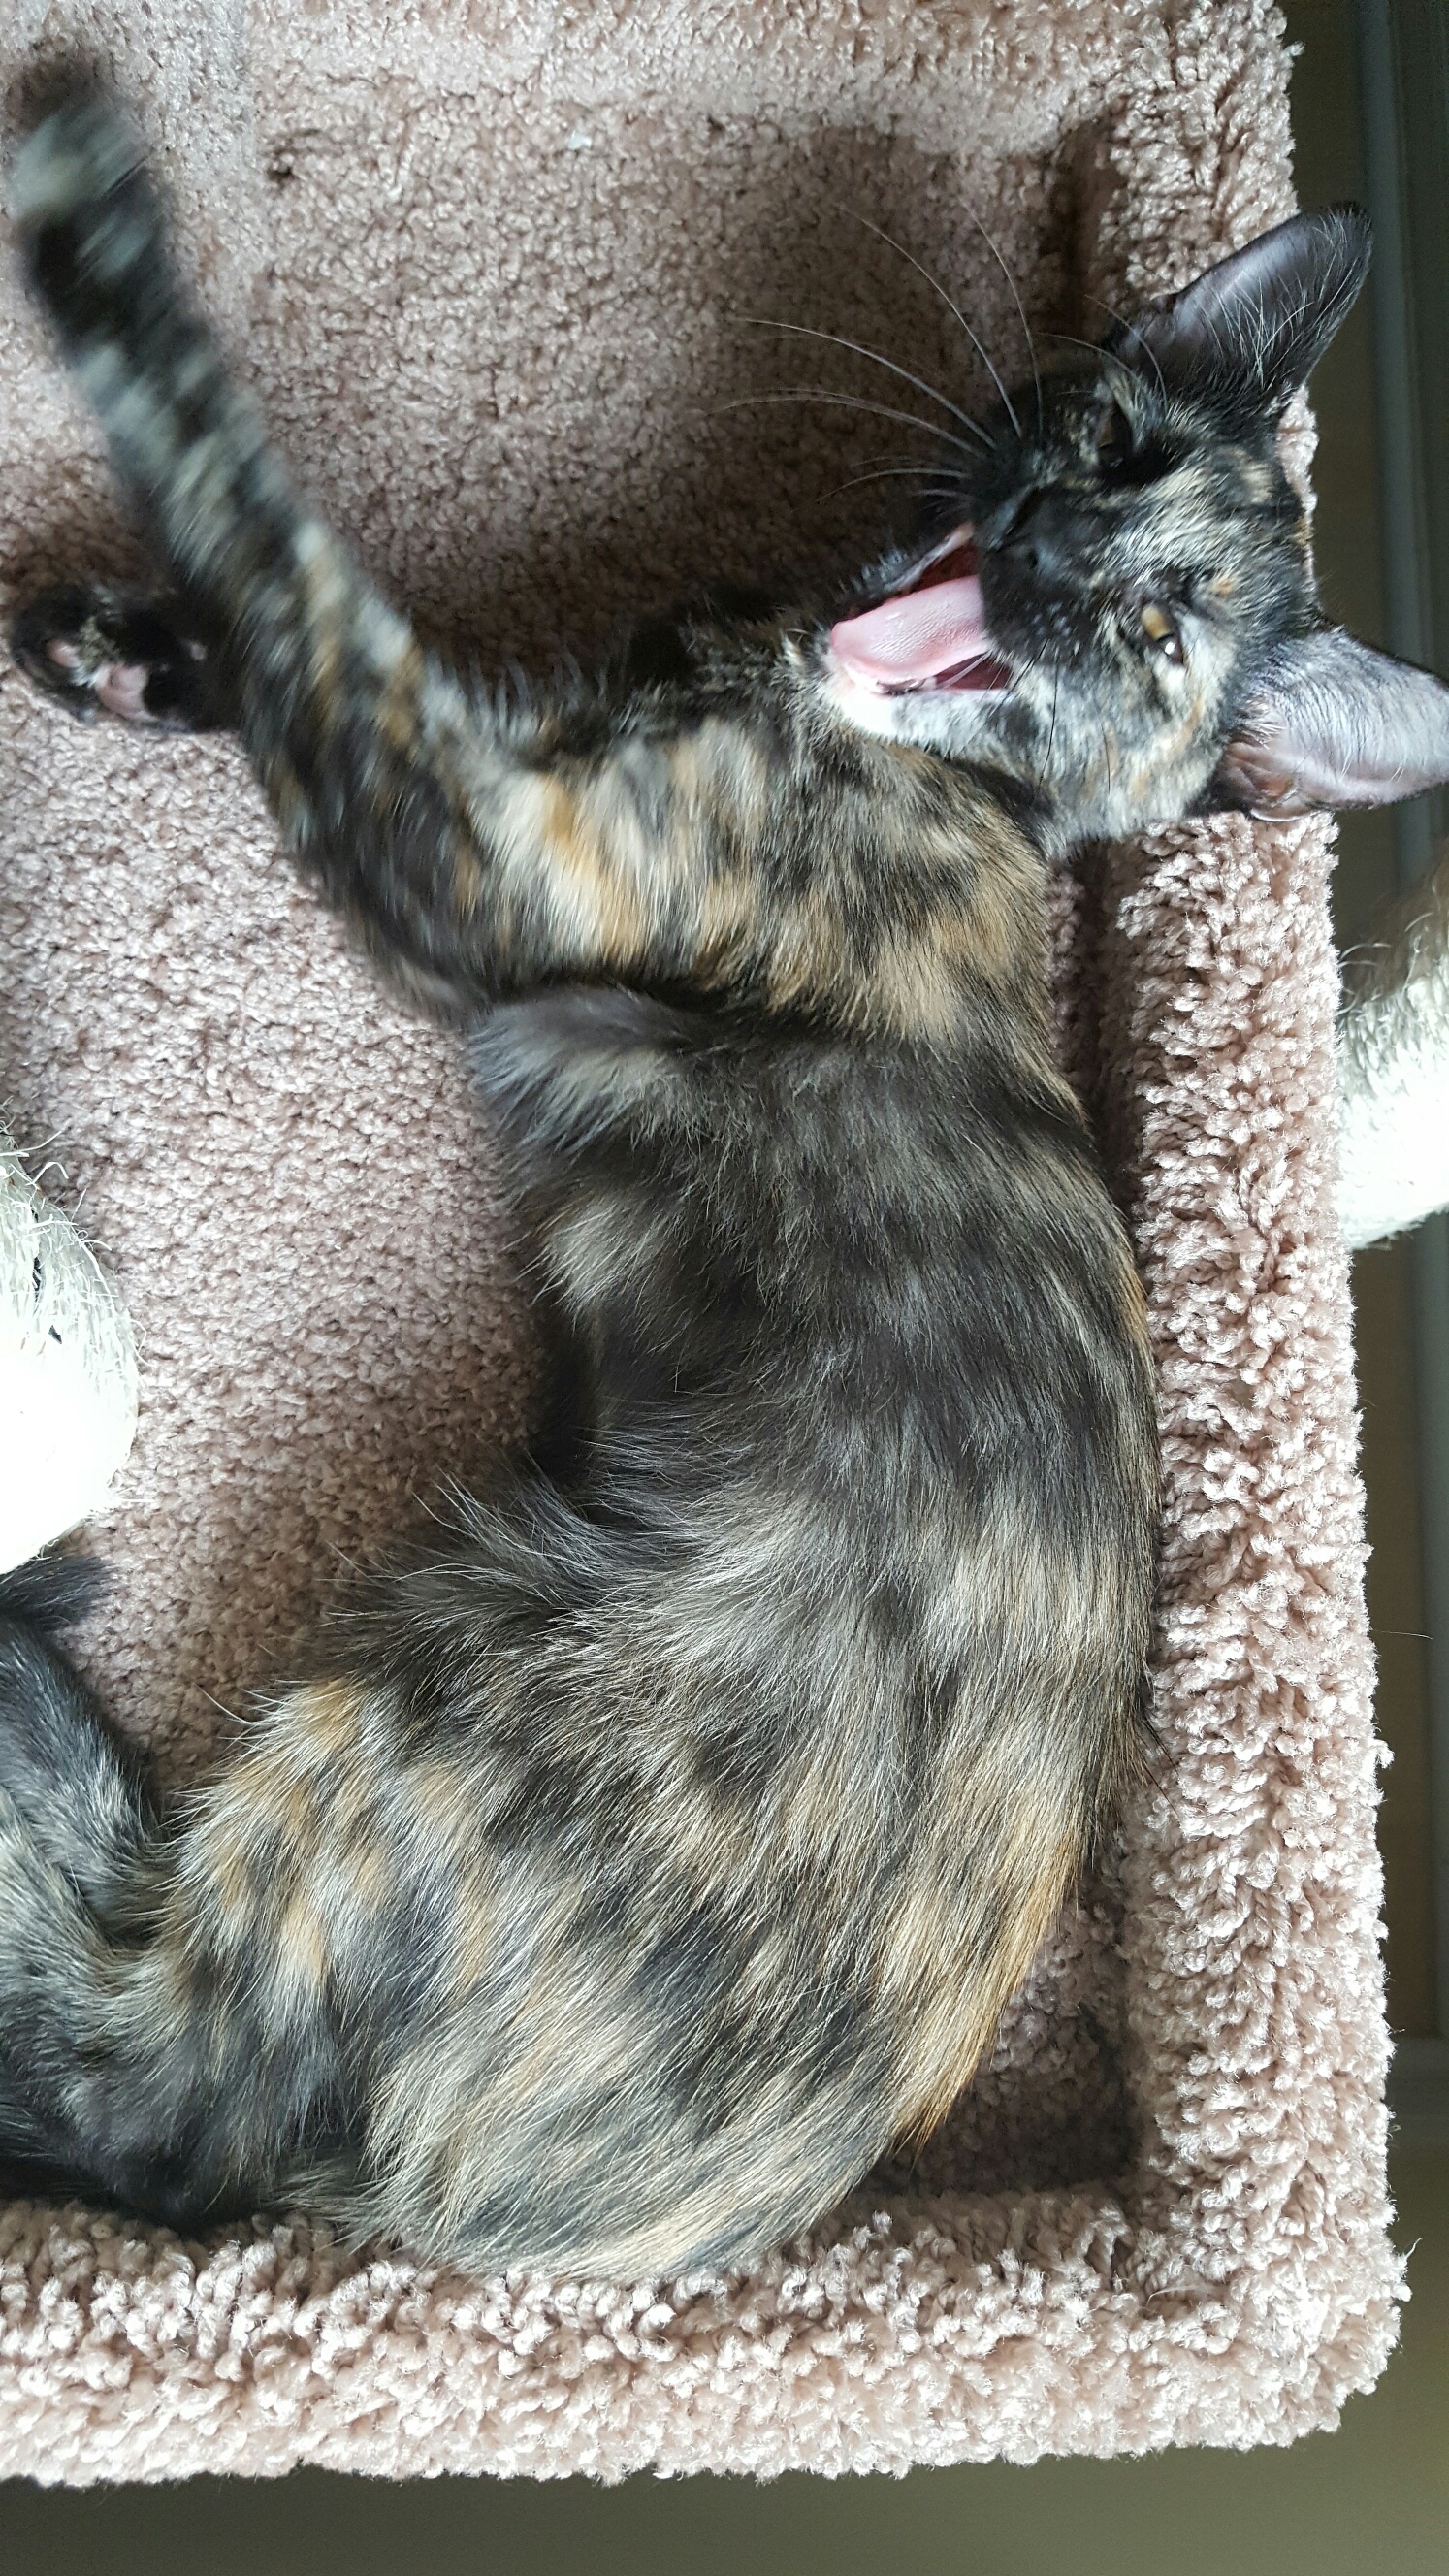 Big Yawn